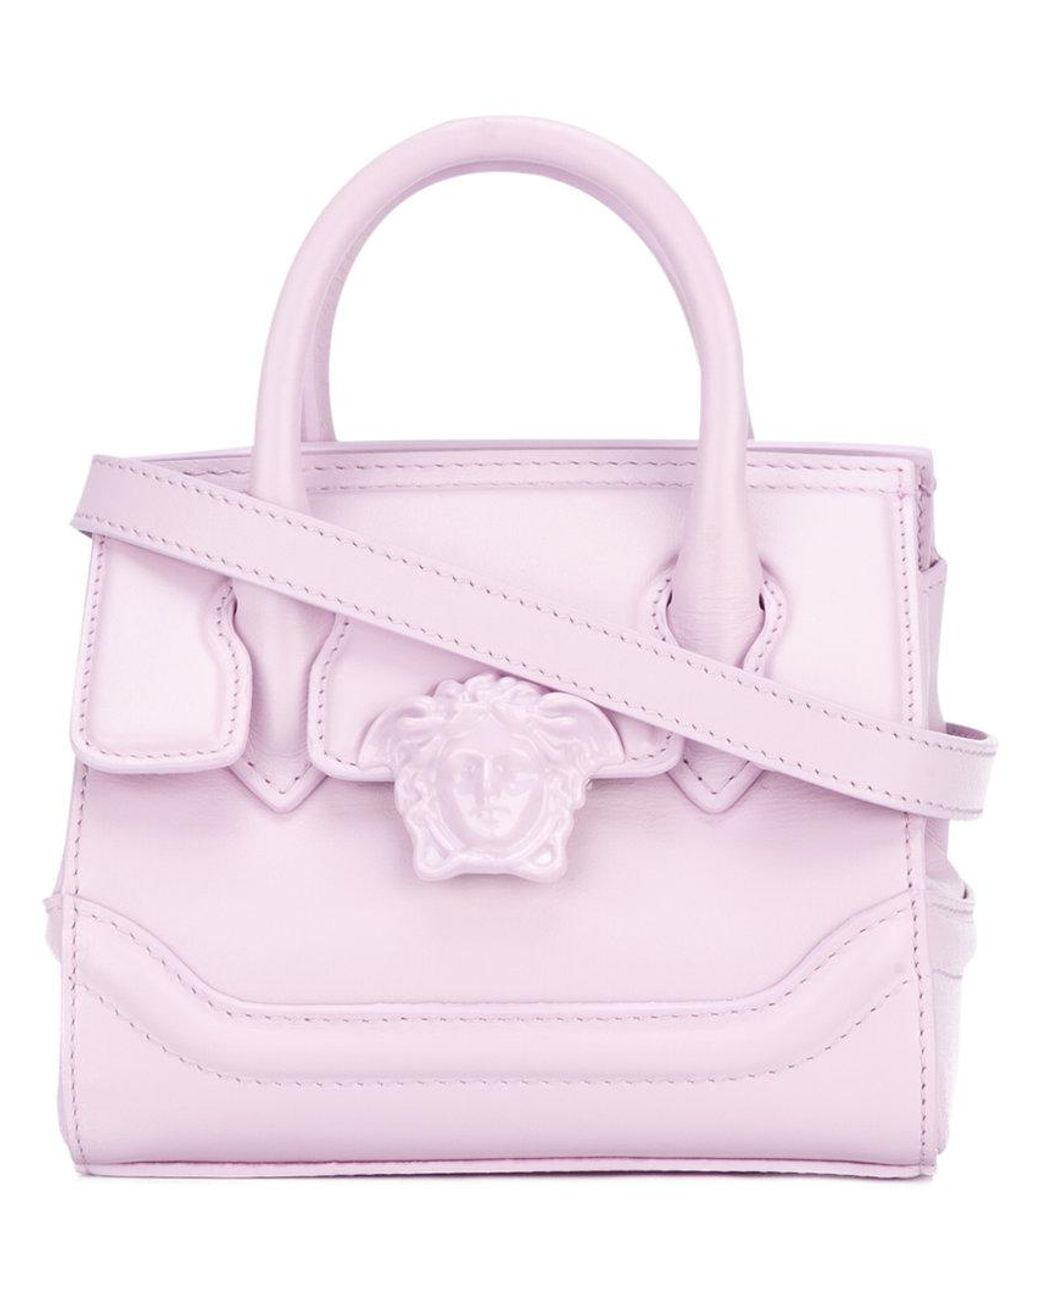 Versace's exclusive Palazzo Empire bag for Hong Kong